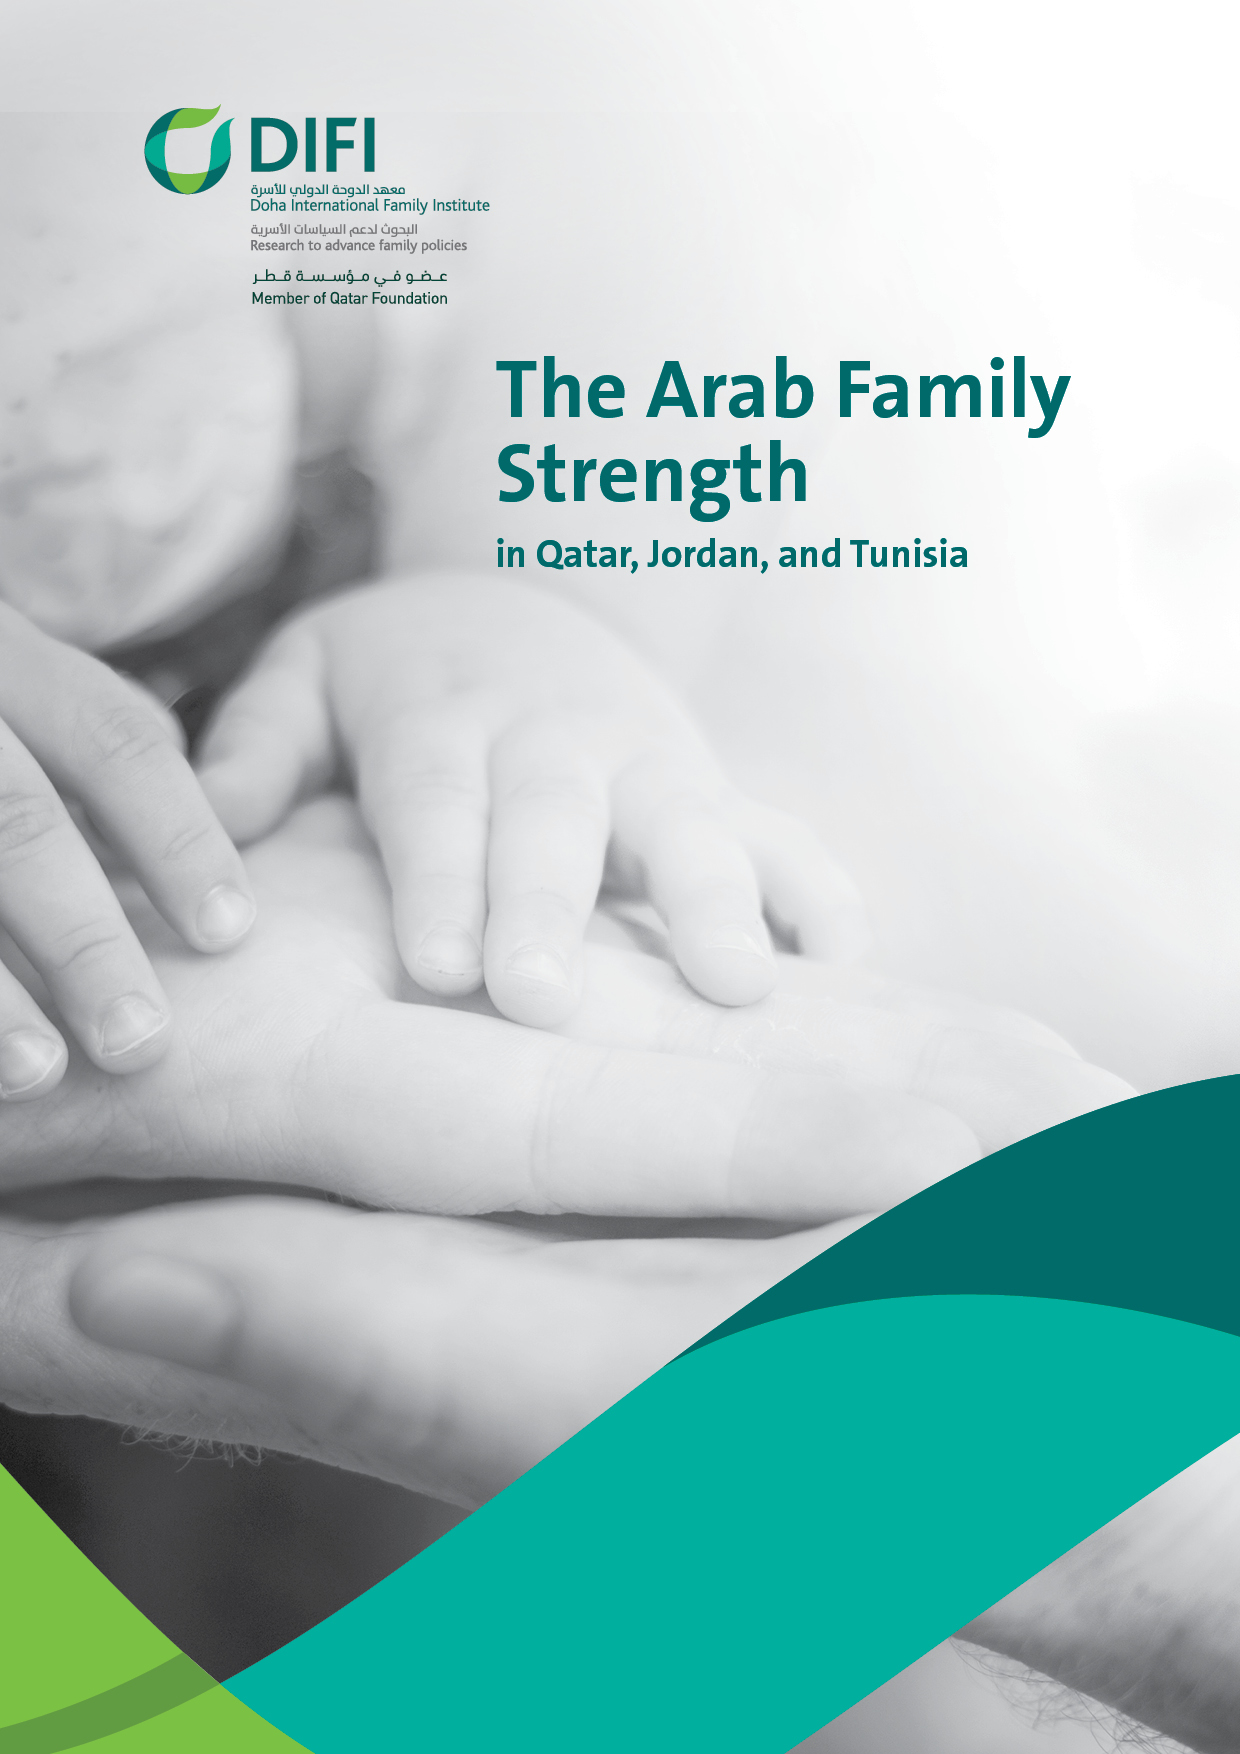 The Arab Family Strength in Qatar, Jordan, and Tunisia